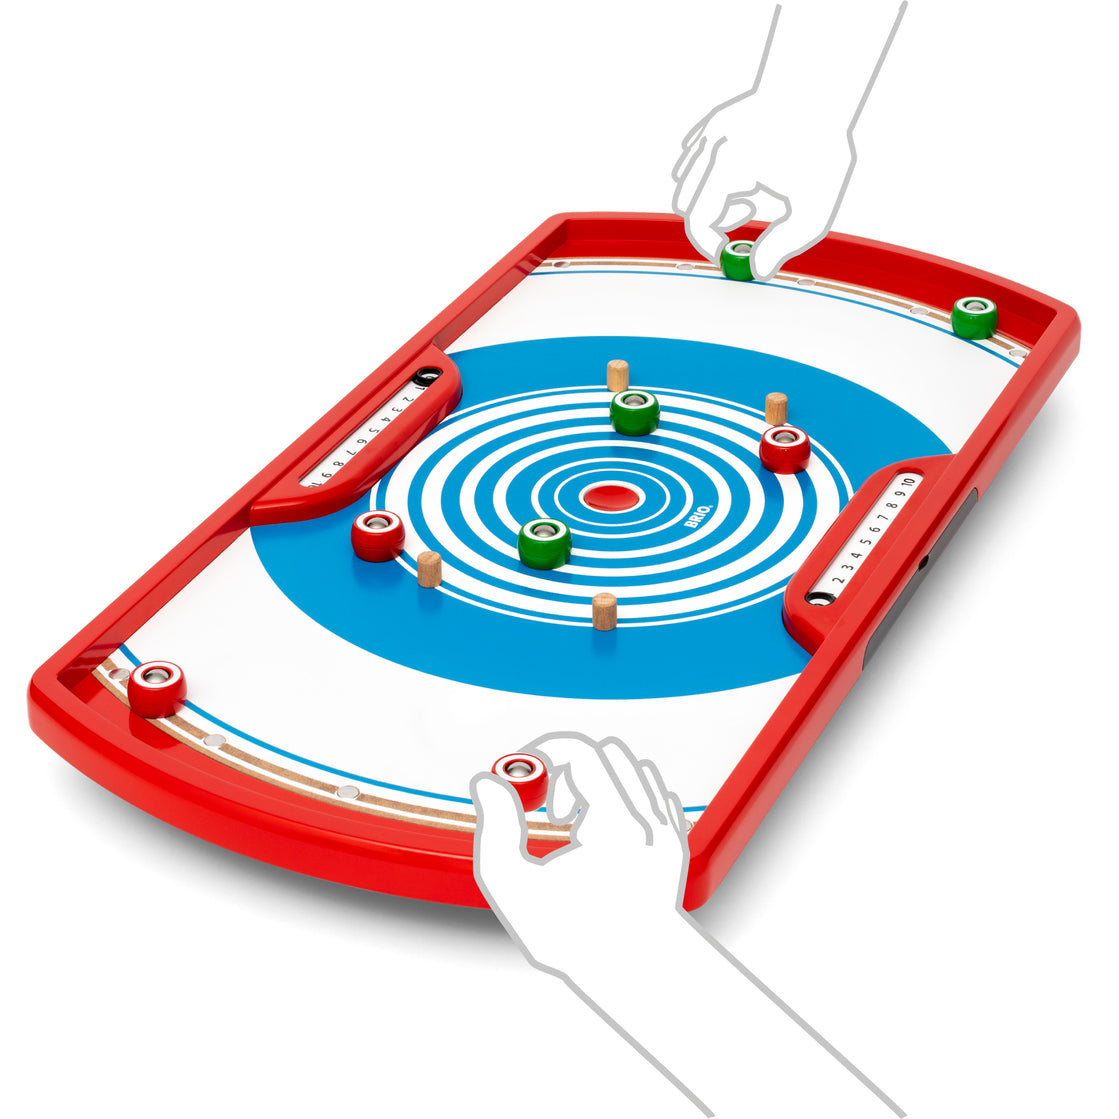 Buy 2 IN 1 Portable Tabletop Shuffleboard Curling Game Online on GEECR